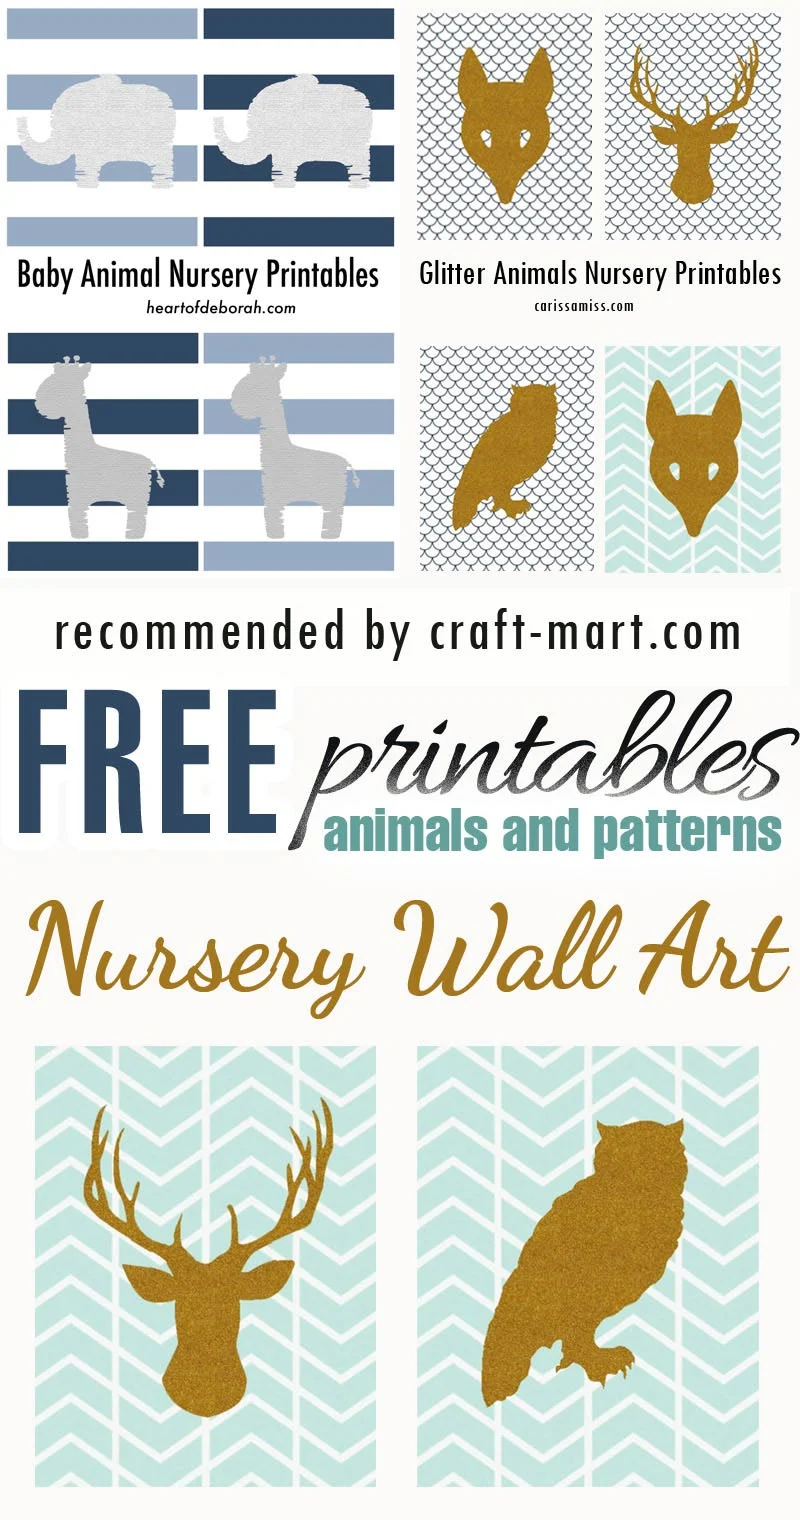 Patterns and Animals Modern Nursery FREE printables #freeprintables #freenurseryprints #freenurserywallart #cutenurseryprints #cuteanimalsfreeprintables #animalsfreenurseryprintables